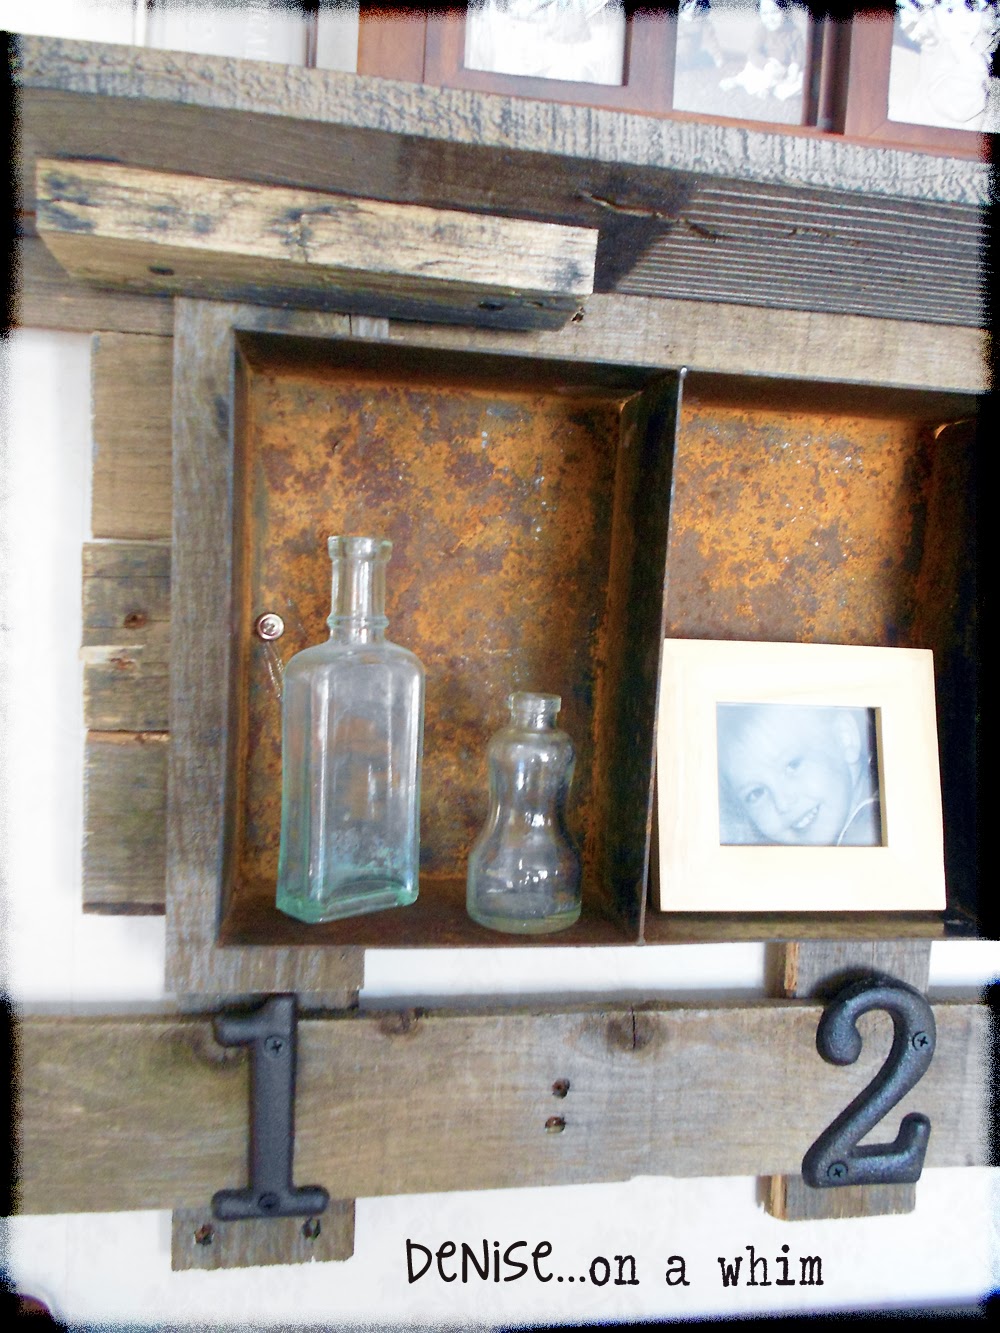 A rusty bin turned shelf for displaying small items via http://deniseonawhim.blogspot.com